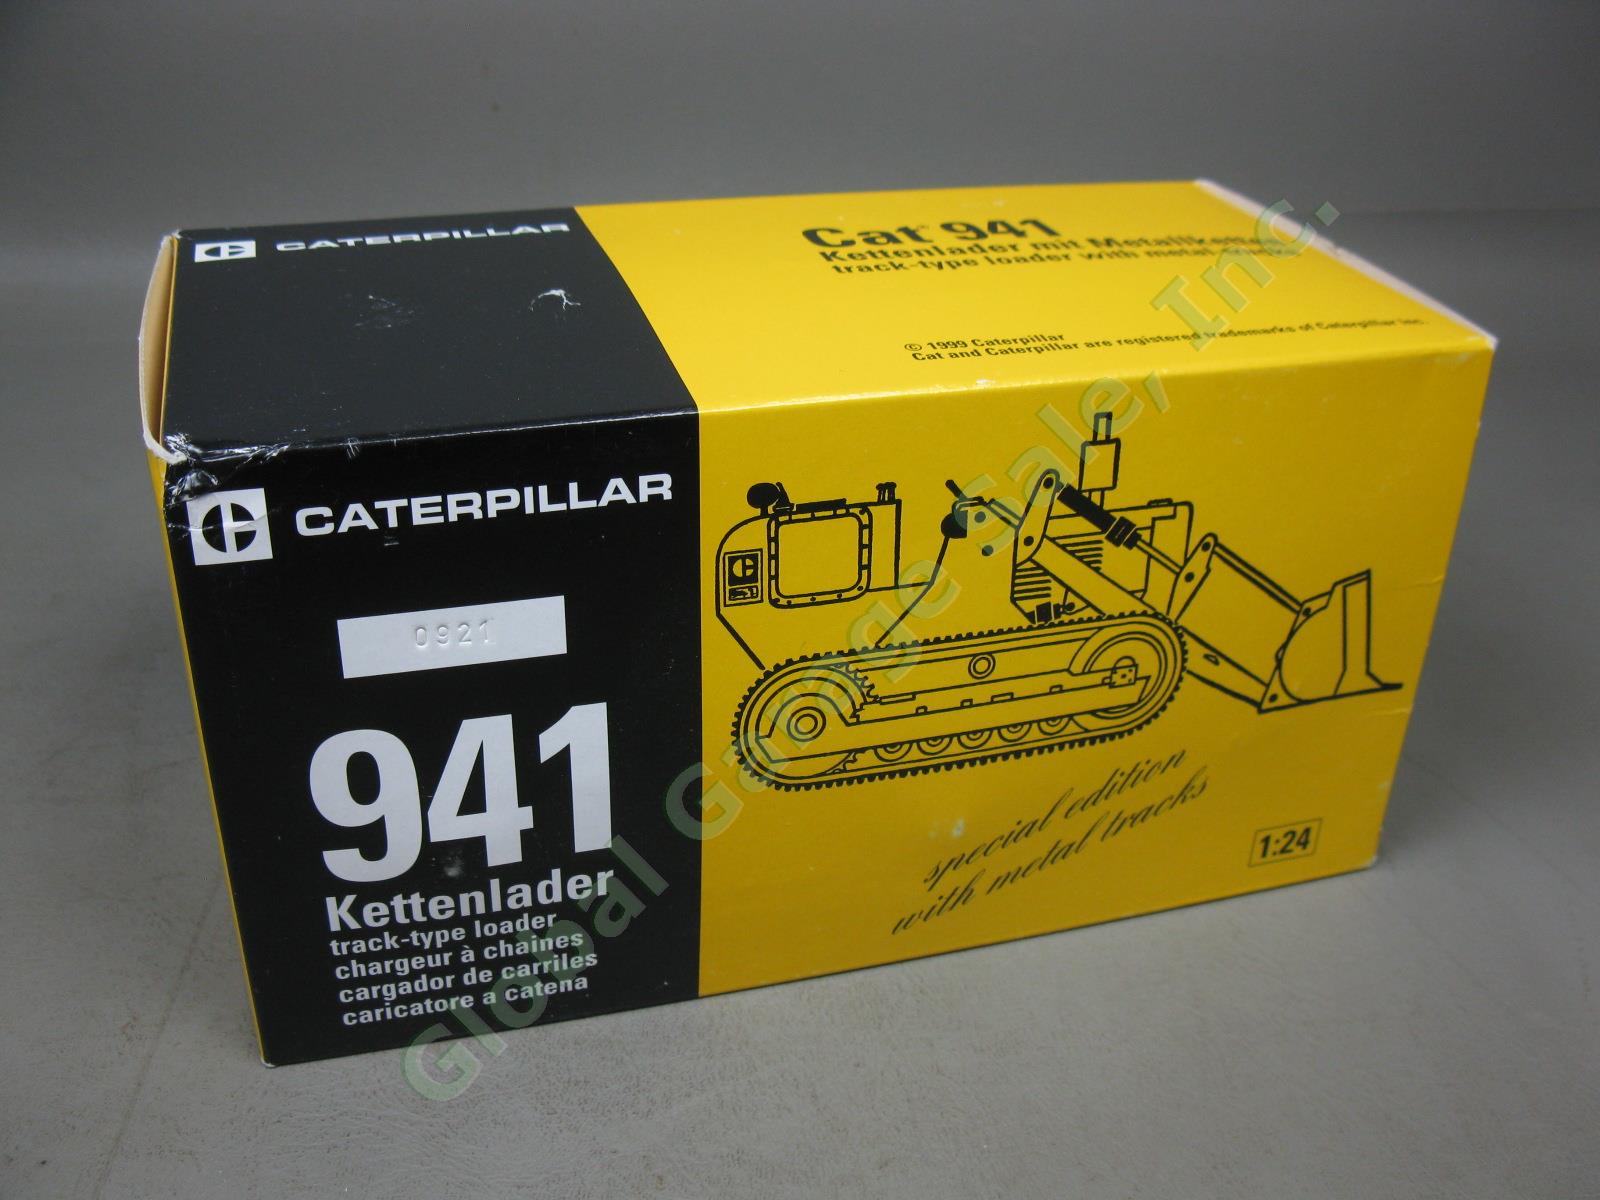 NZG Caterpillar CAT 941 Special Edition 1:24 Kettenlader Track-Type Loader #0921